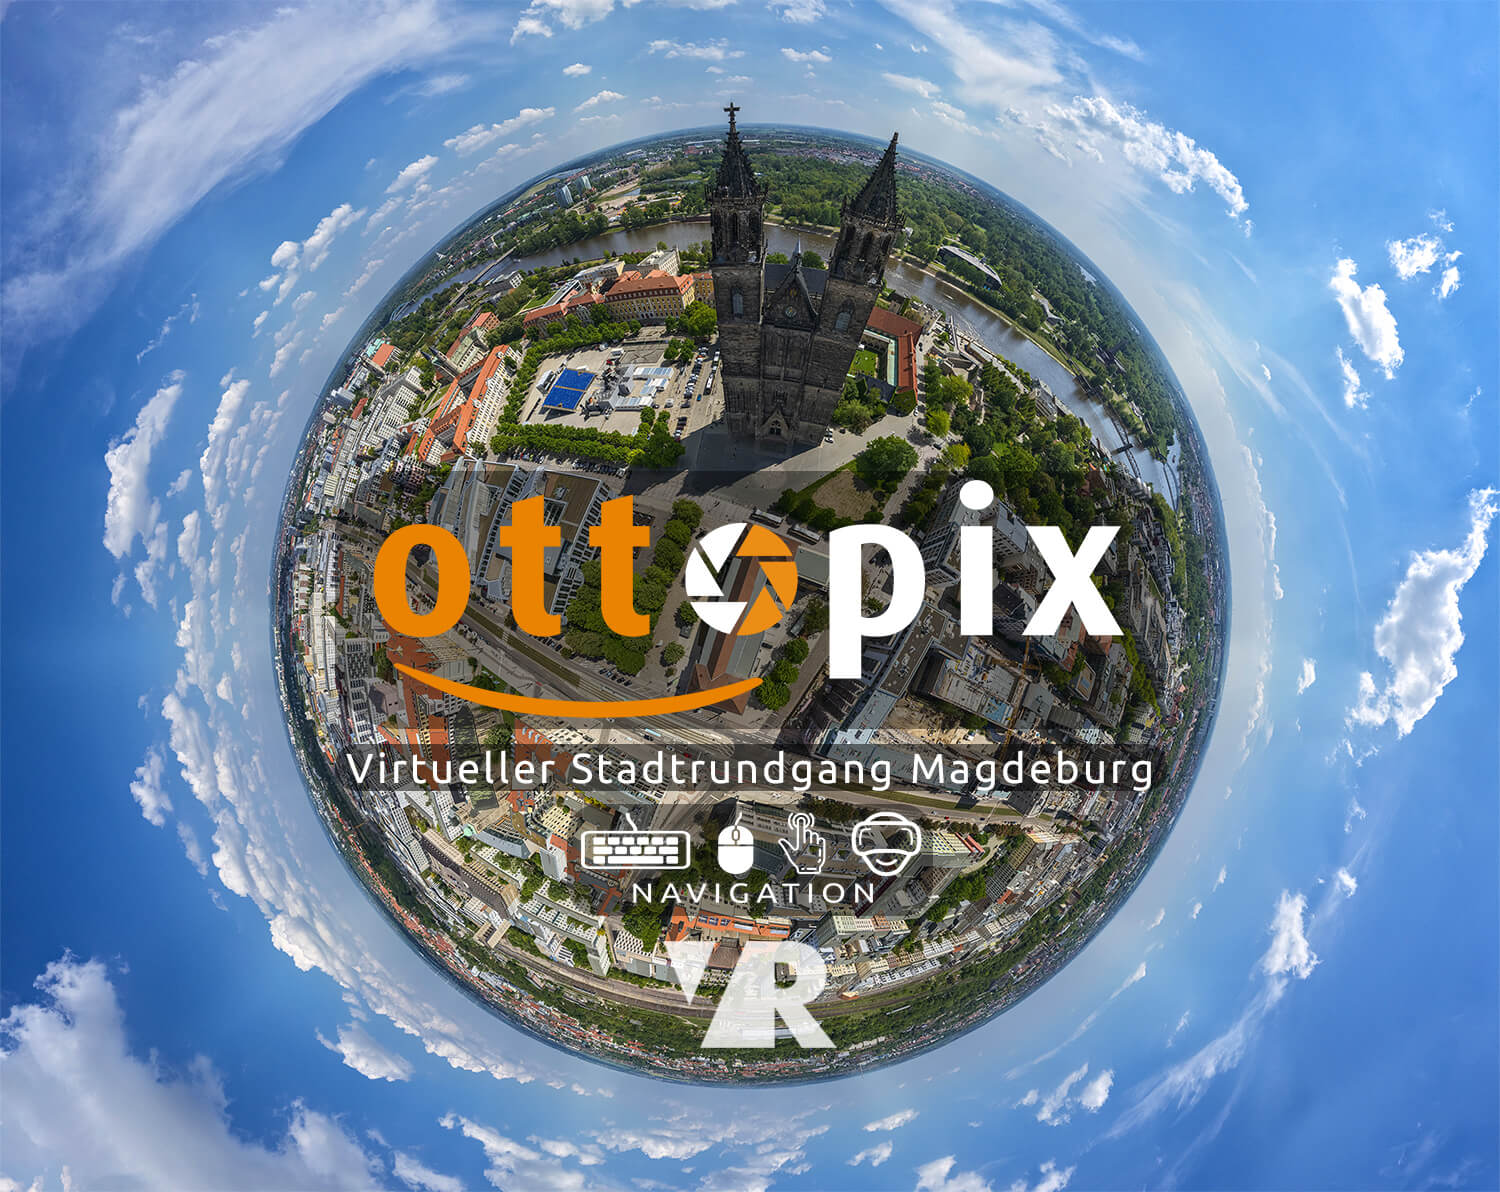 Projekt Ottopix - Die Ottostadt in Pixel